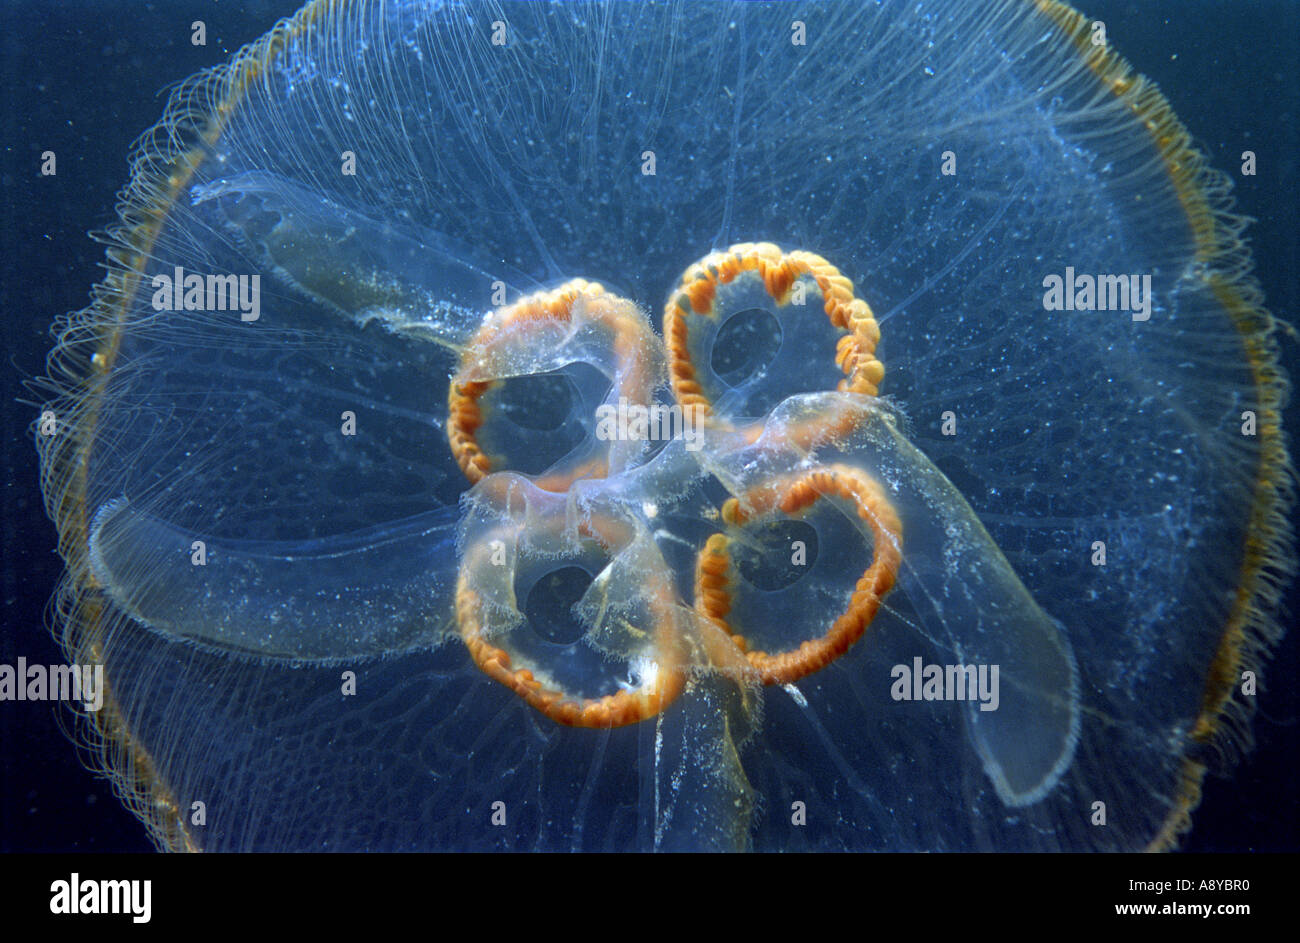 A jellyfish Aurelia labiata swimming in natural environment in the sea. North Pacific, underwater Stock Photo